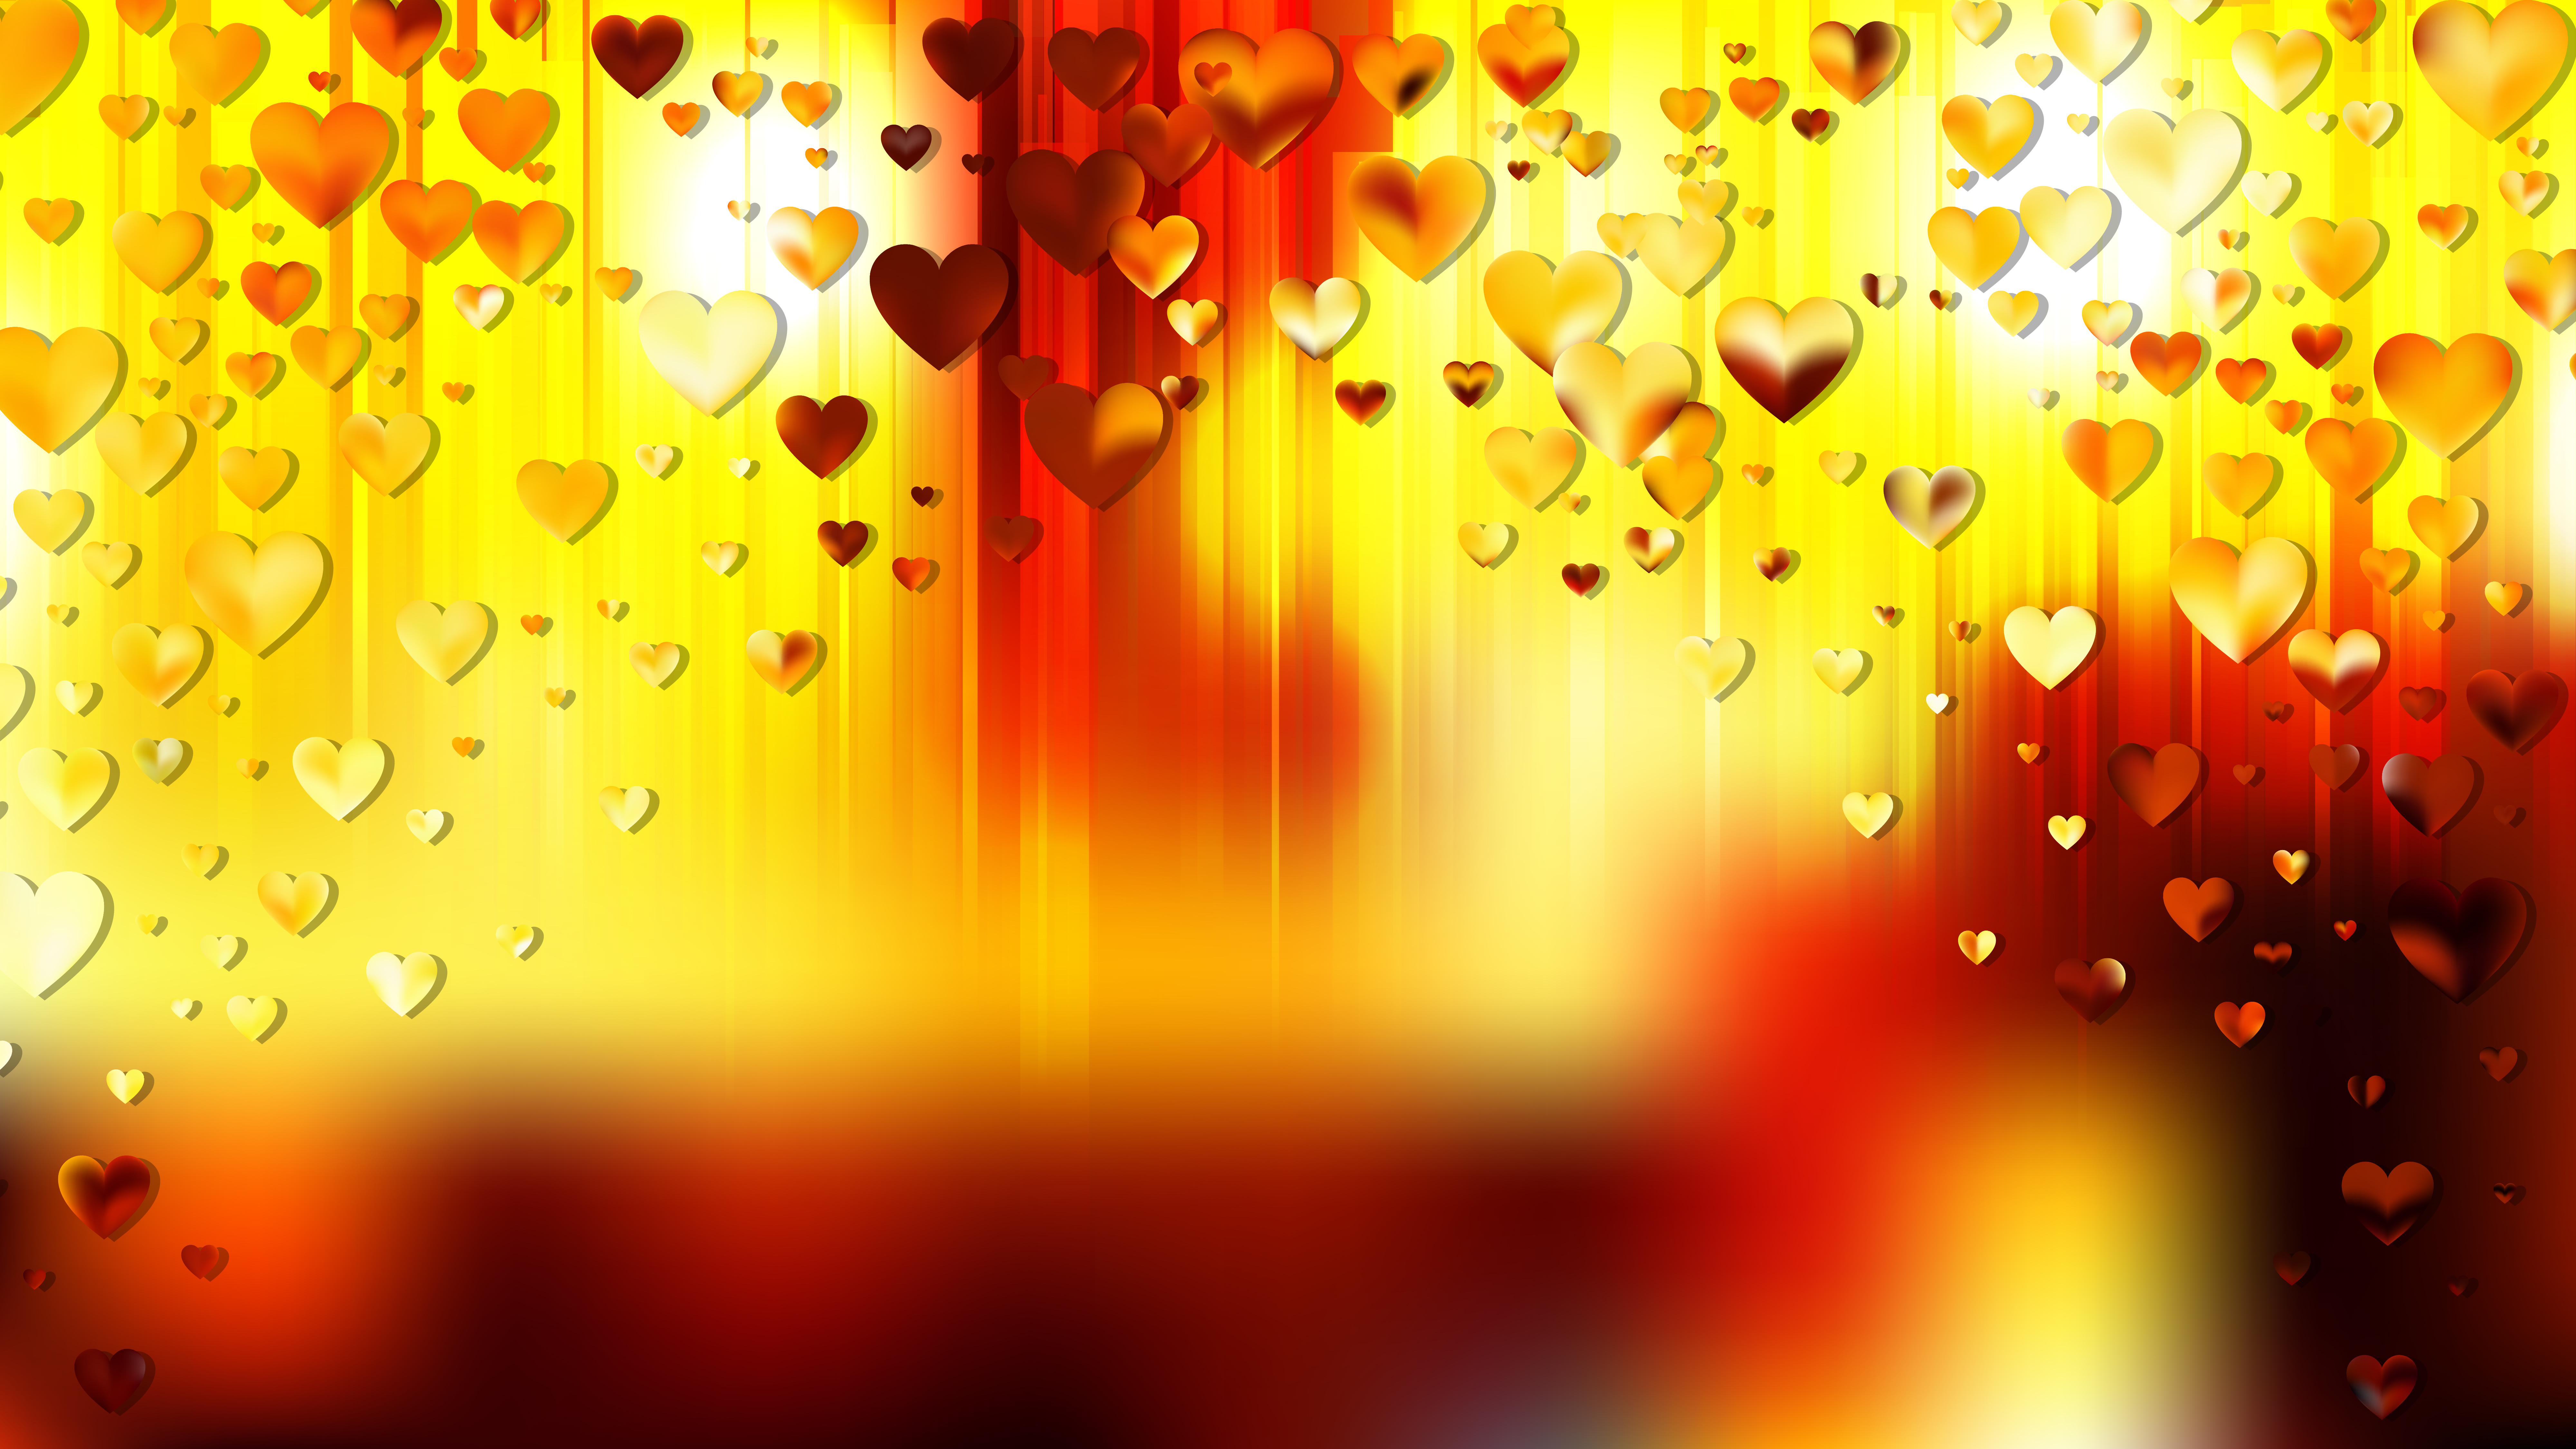 Free Orange and Black Heart Wallpaper Background Image